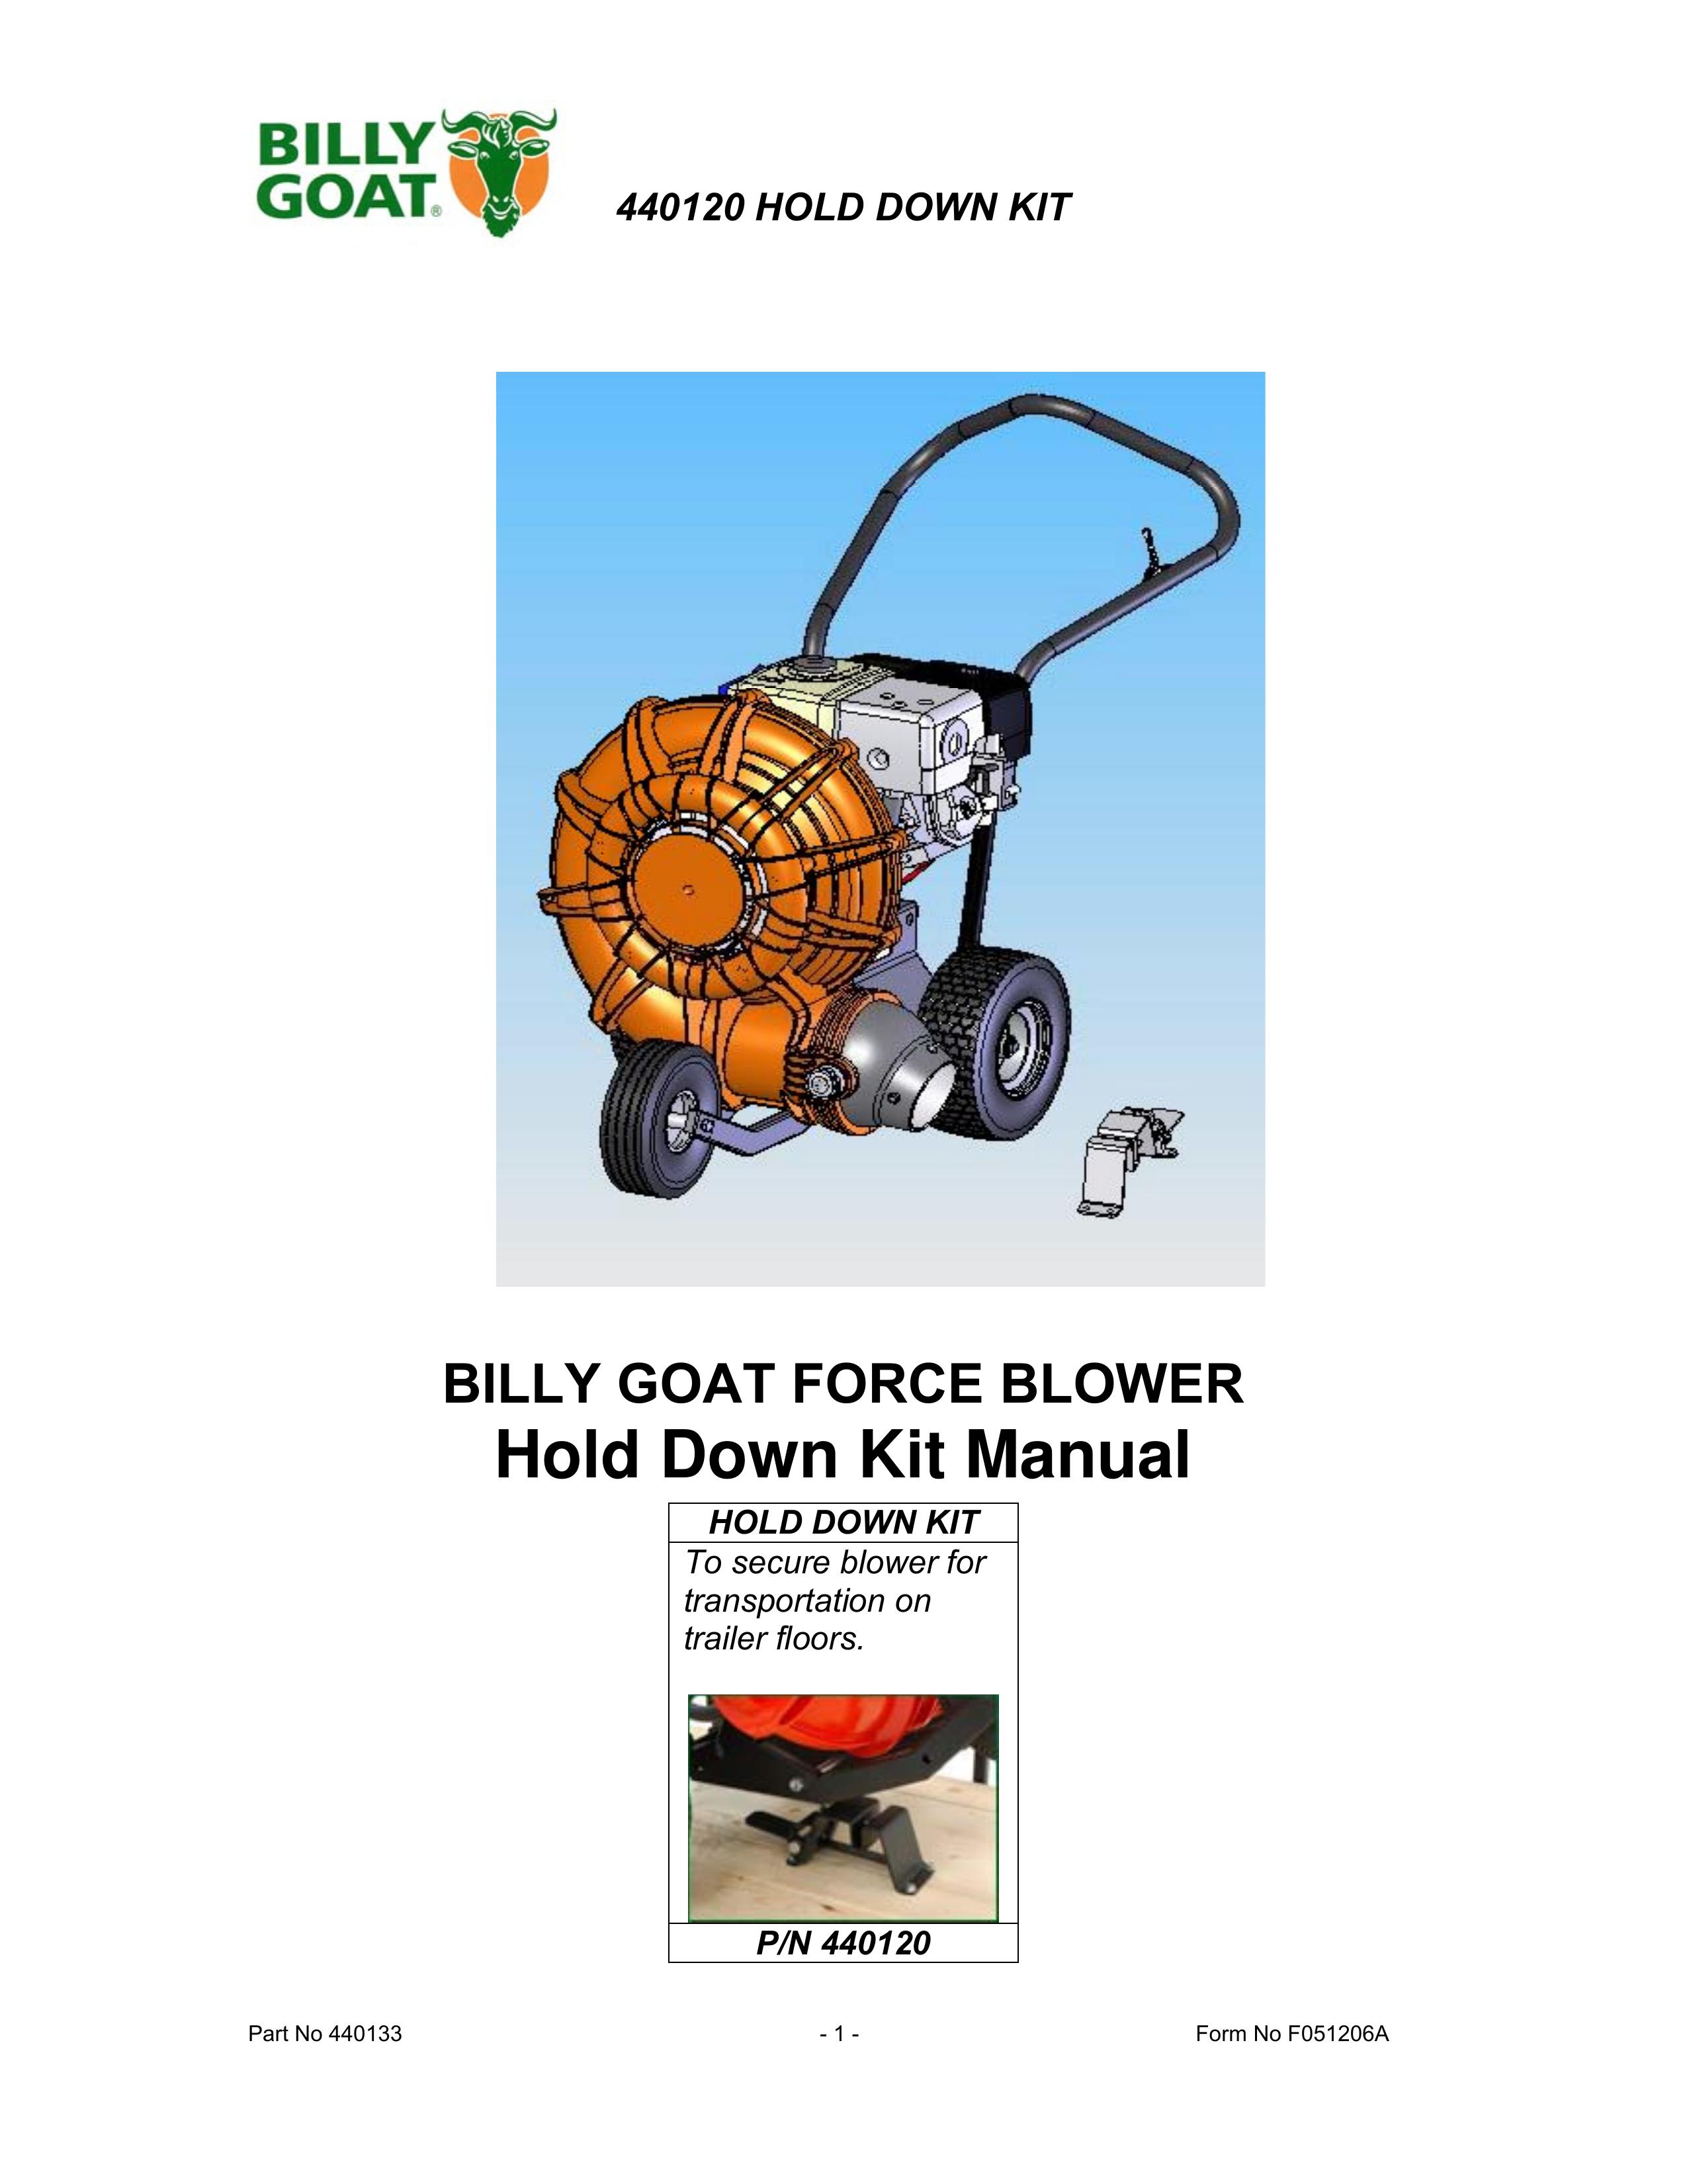 Billy Goat 440120 Blower User Manual